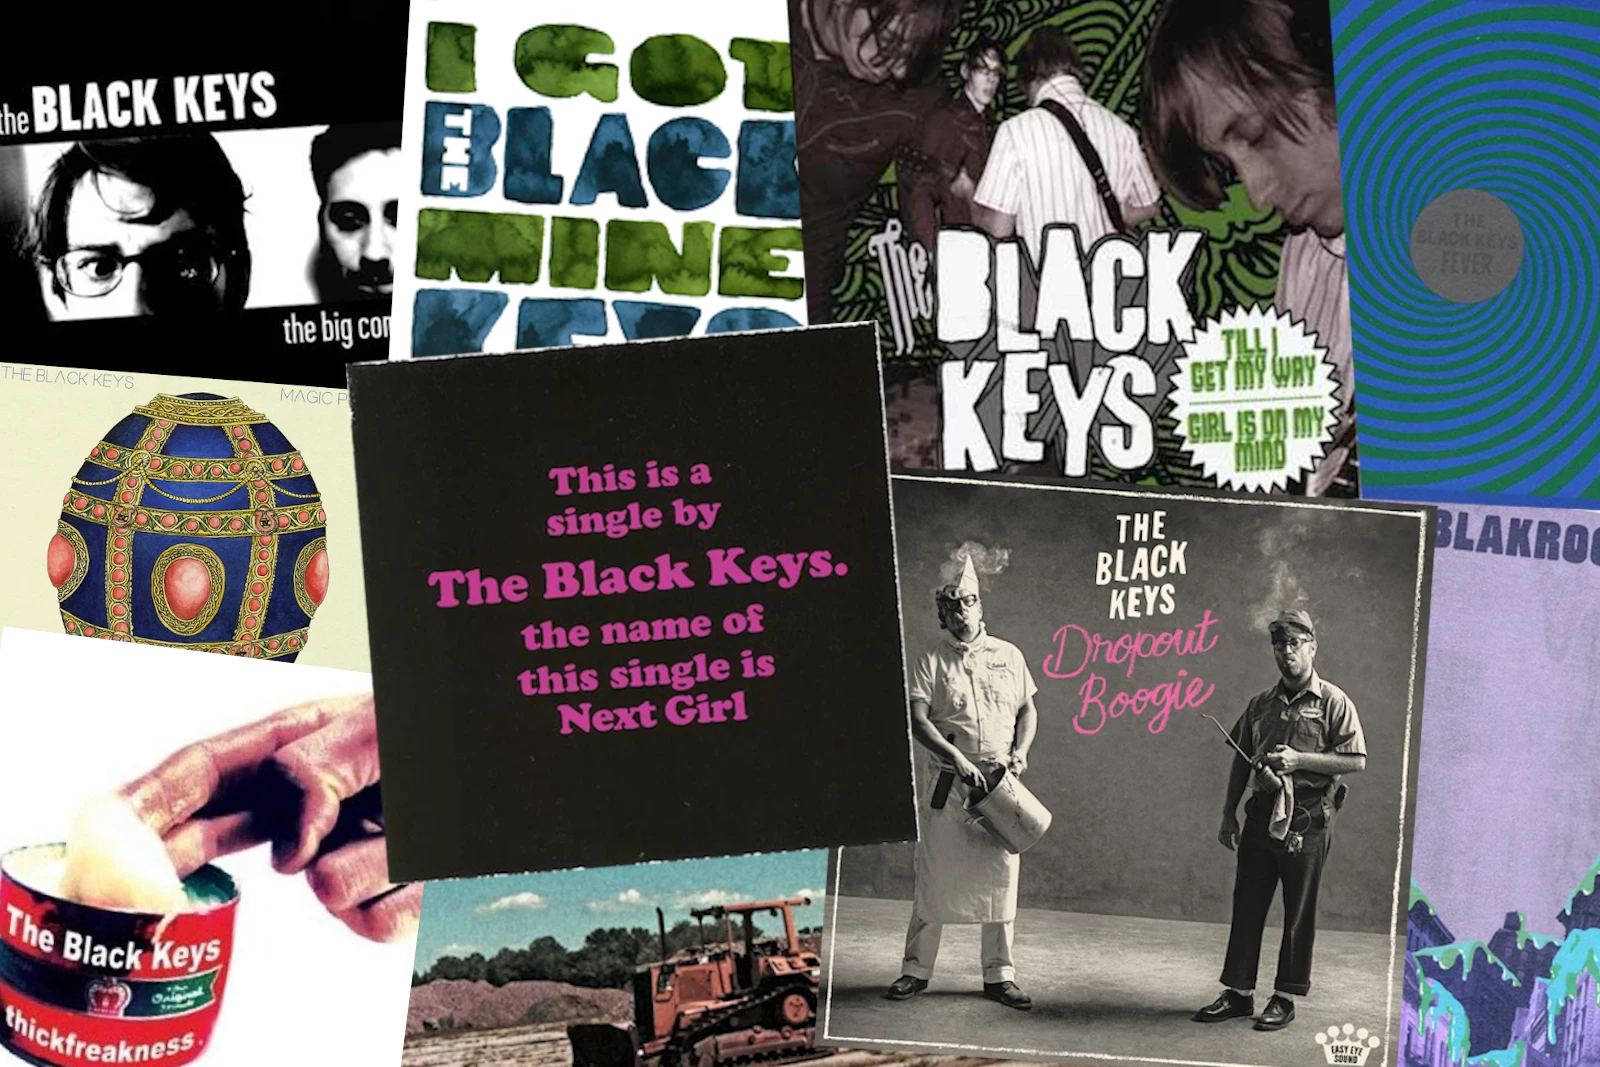 The Big Come Up  Album cover art, Album covers, The black keys